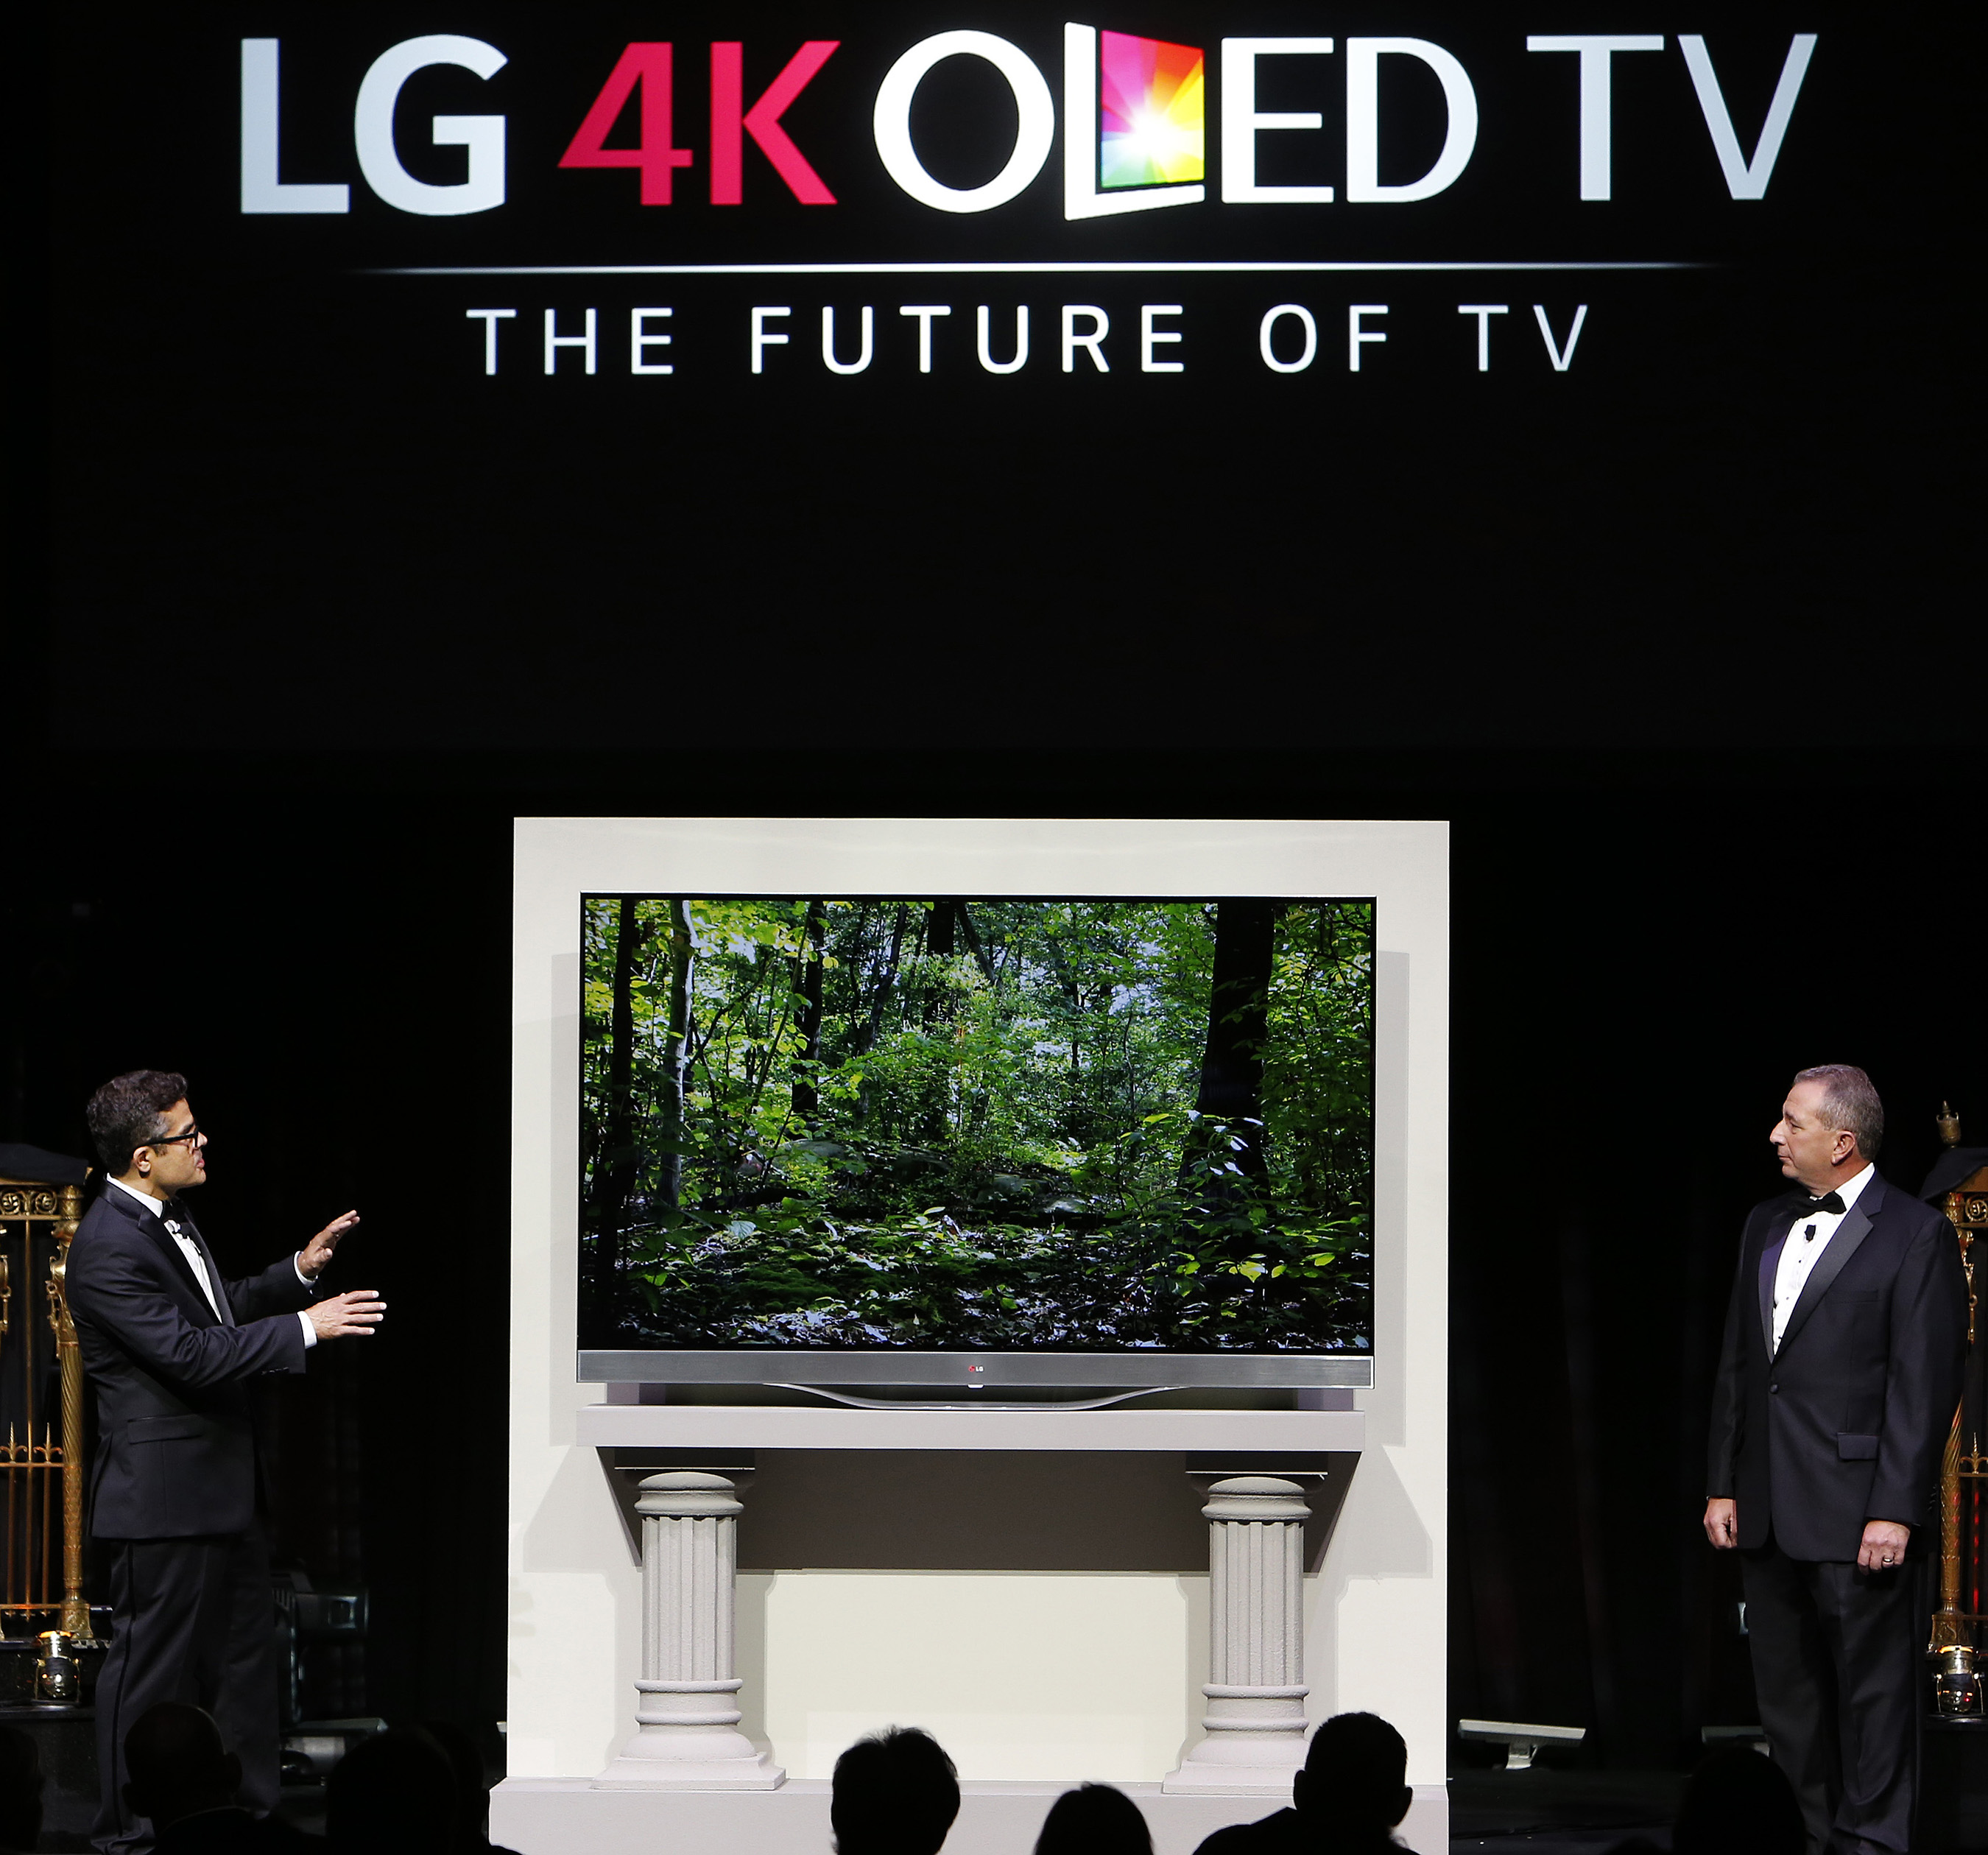 LG Art of the Pixel judge Mark Tribe explains the artwork he created for LG’s Ultra HD 4K OLED TV